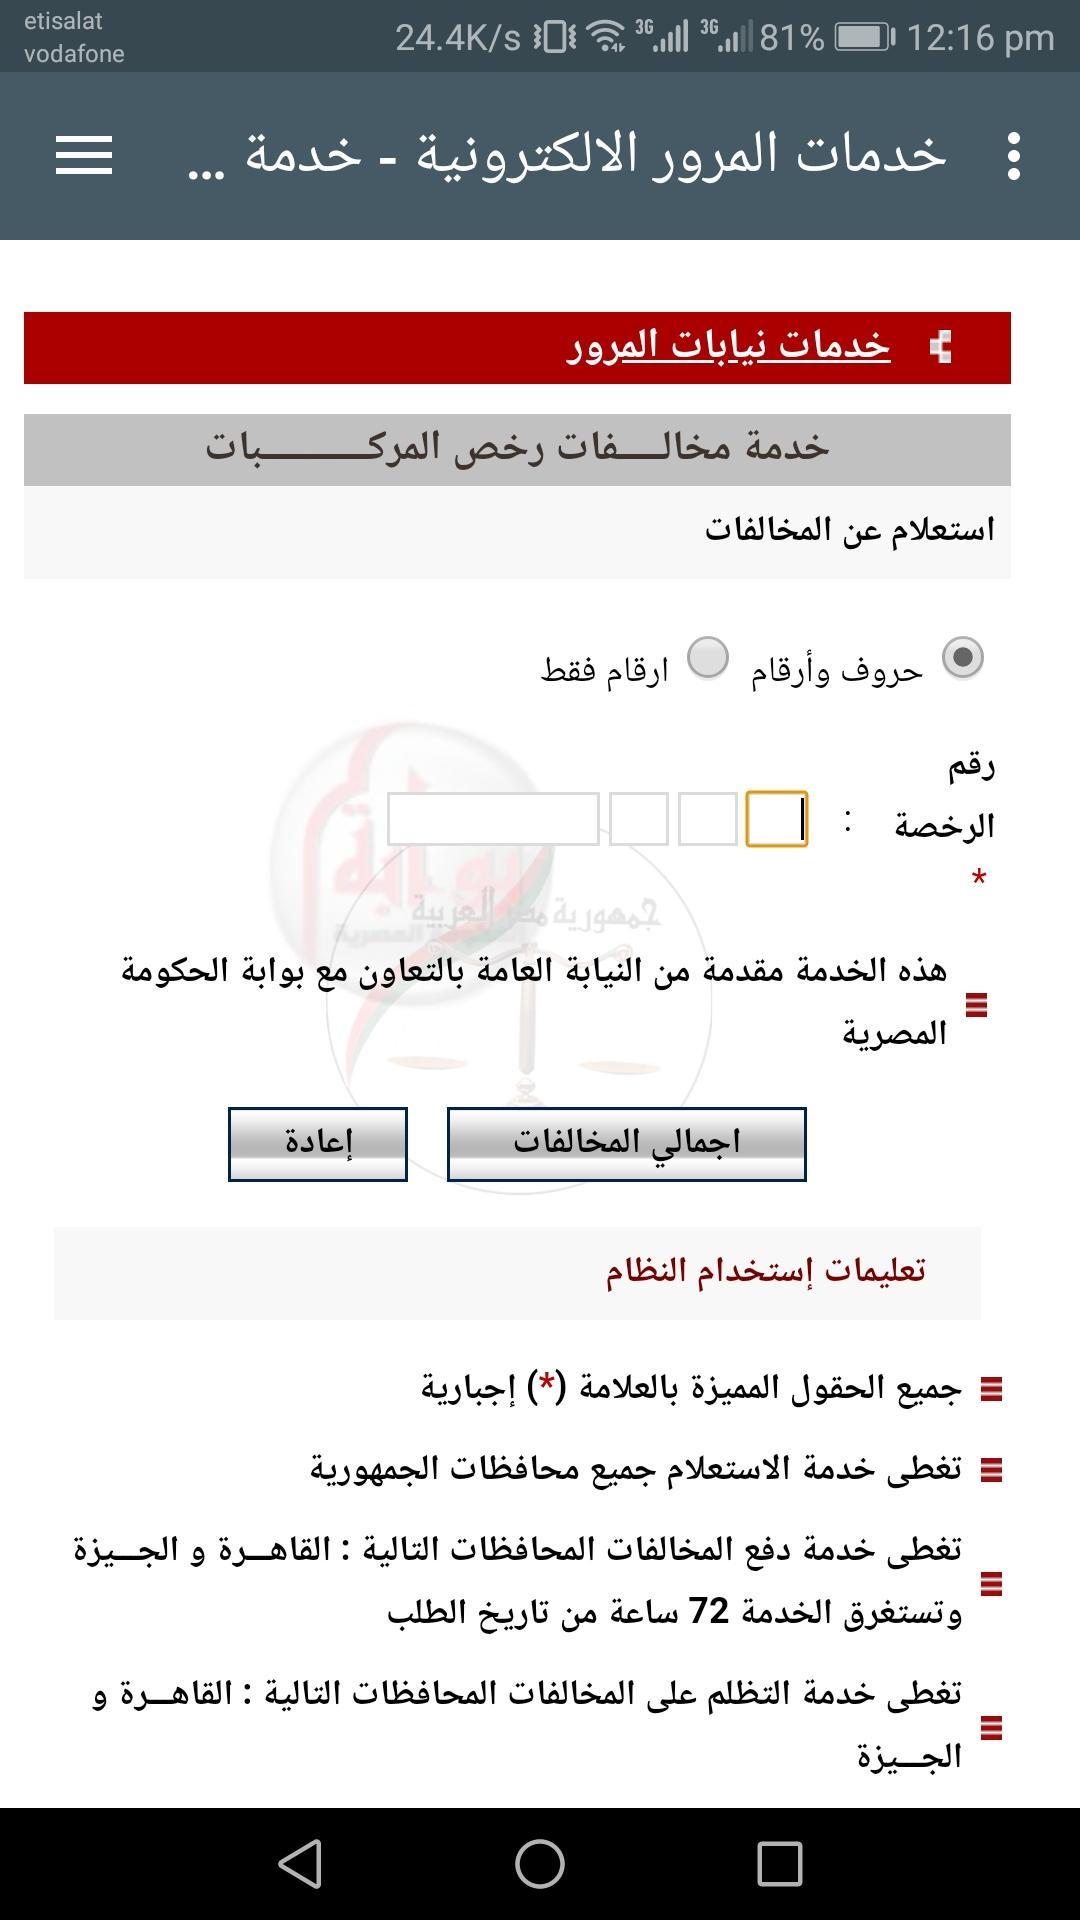 مخالفات المرور مصر For Android Apk Download